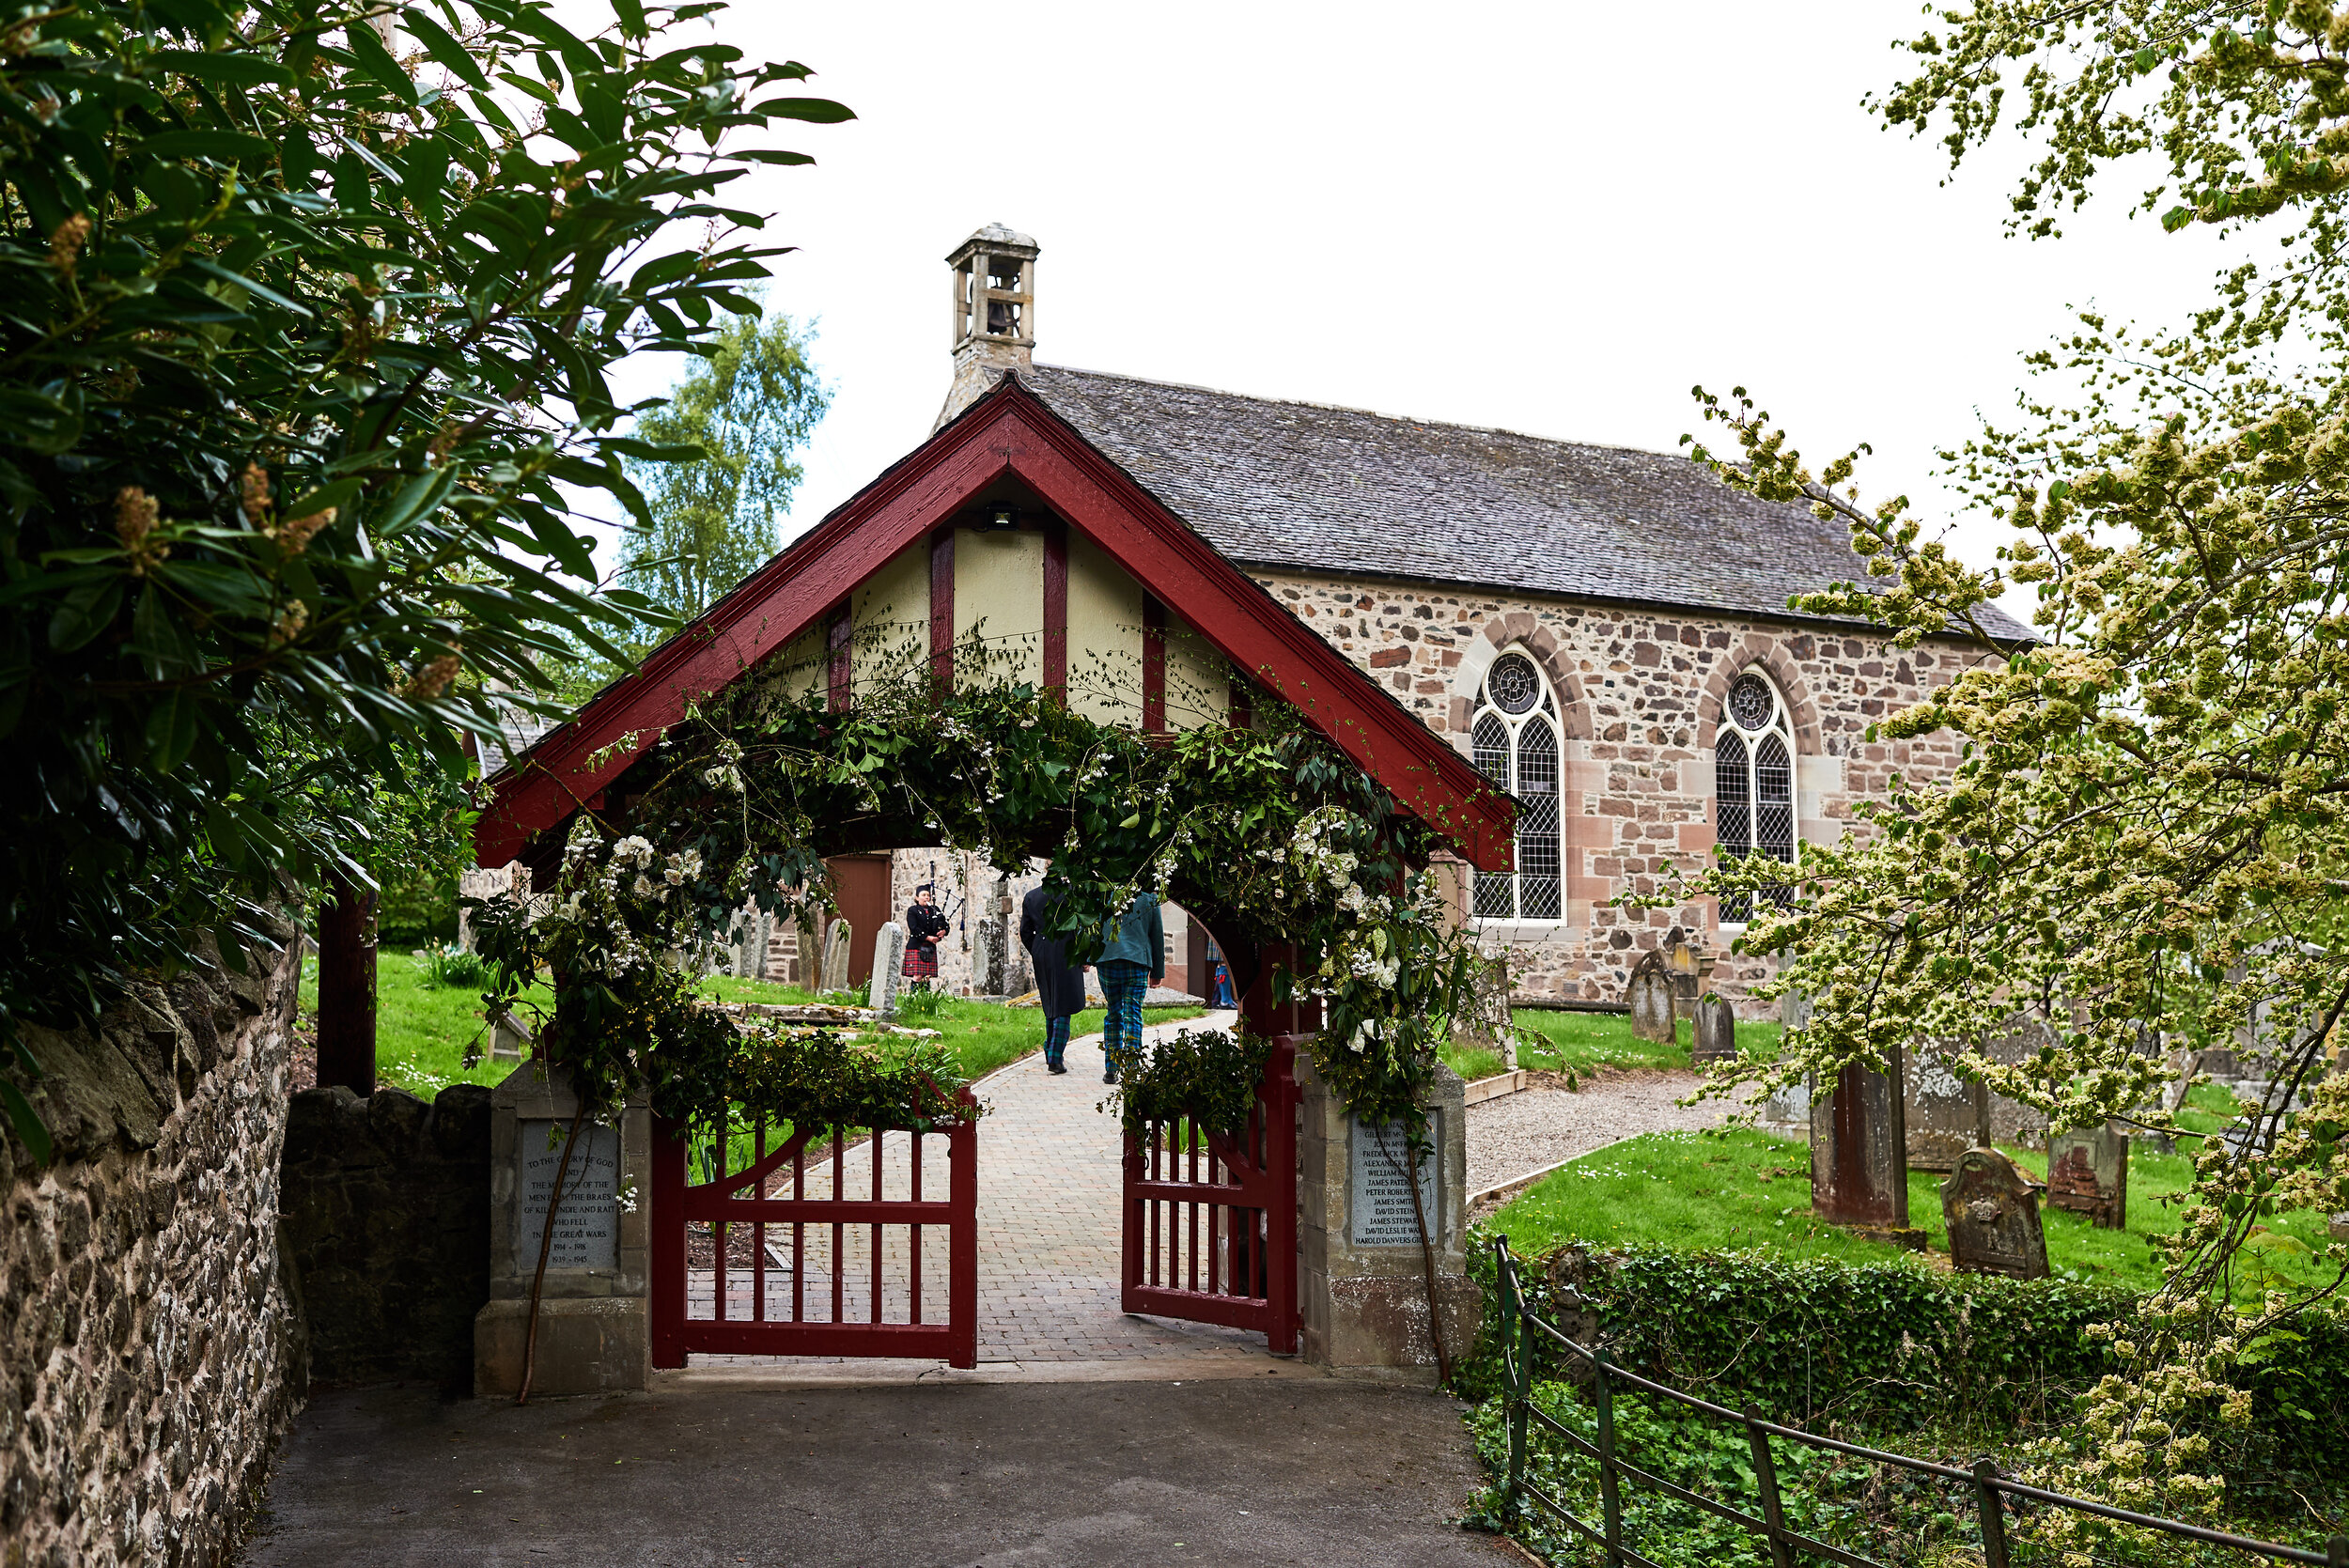 Scottish Church decorated with foliage and cream garland